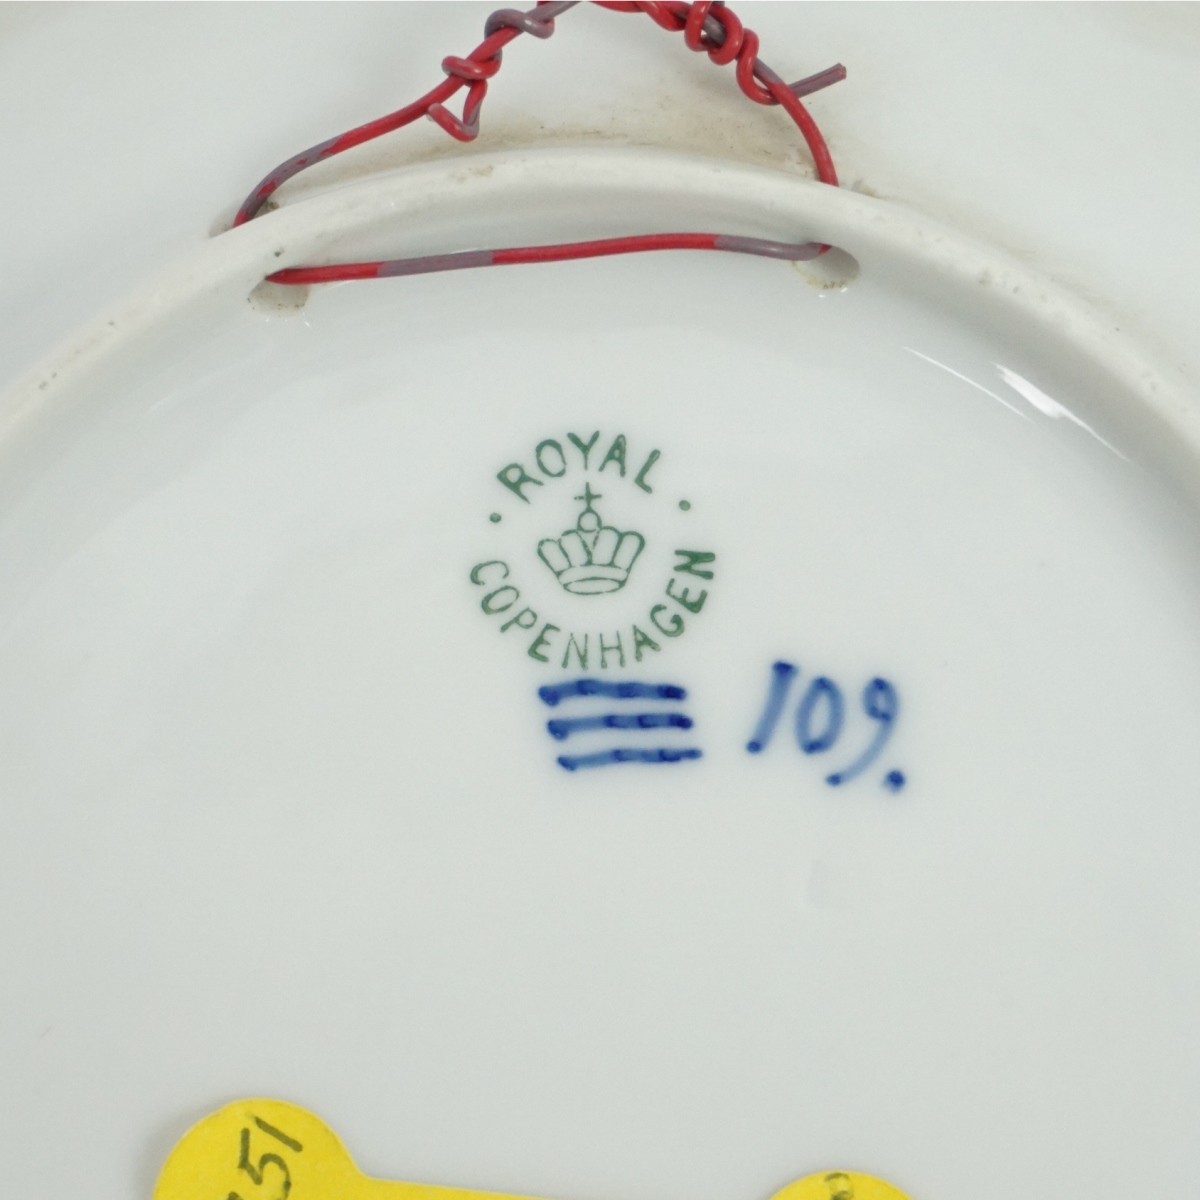 Royal Copenhagen Christmas Plates